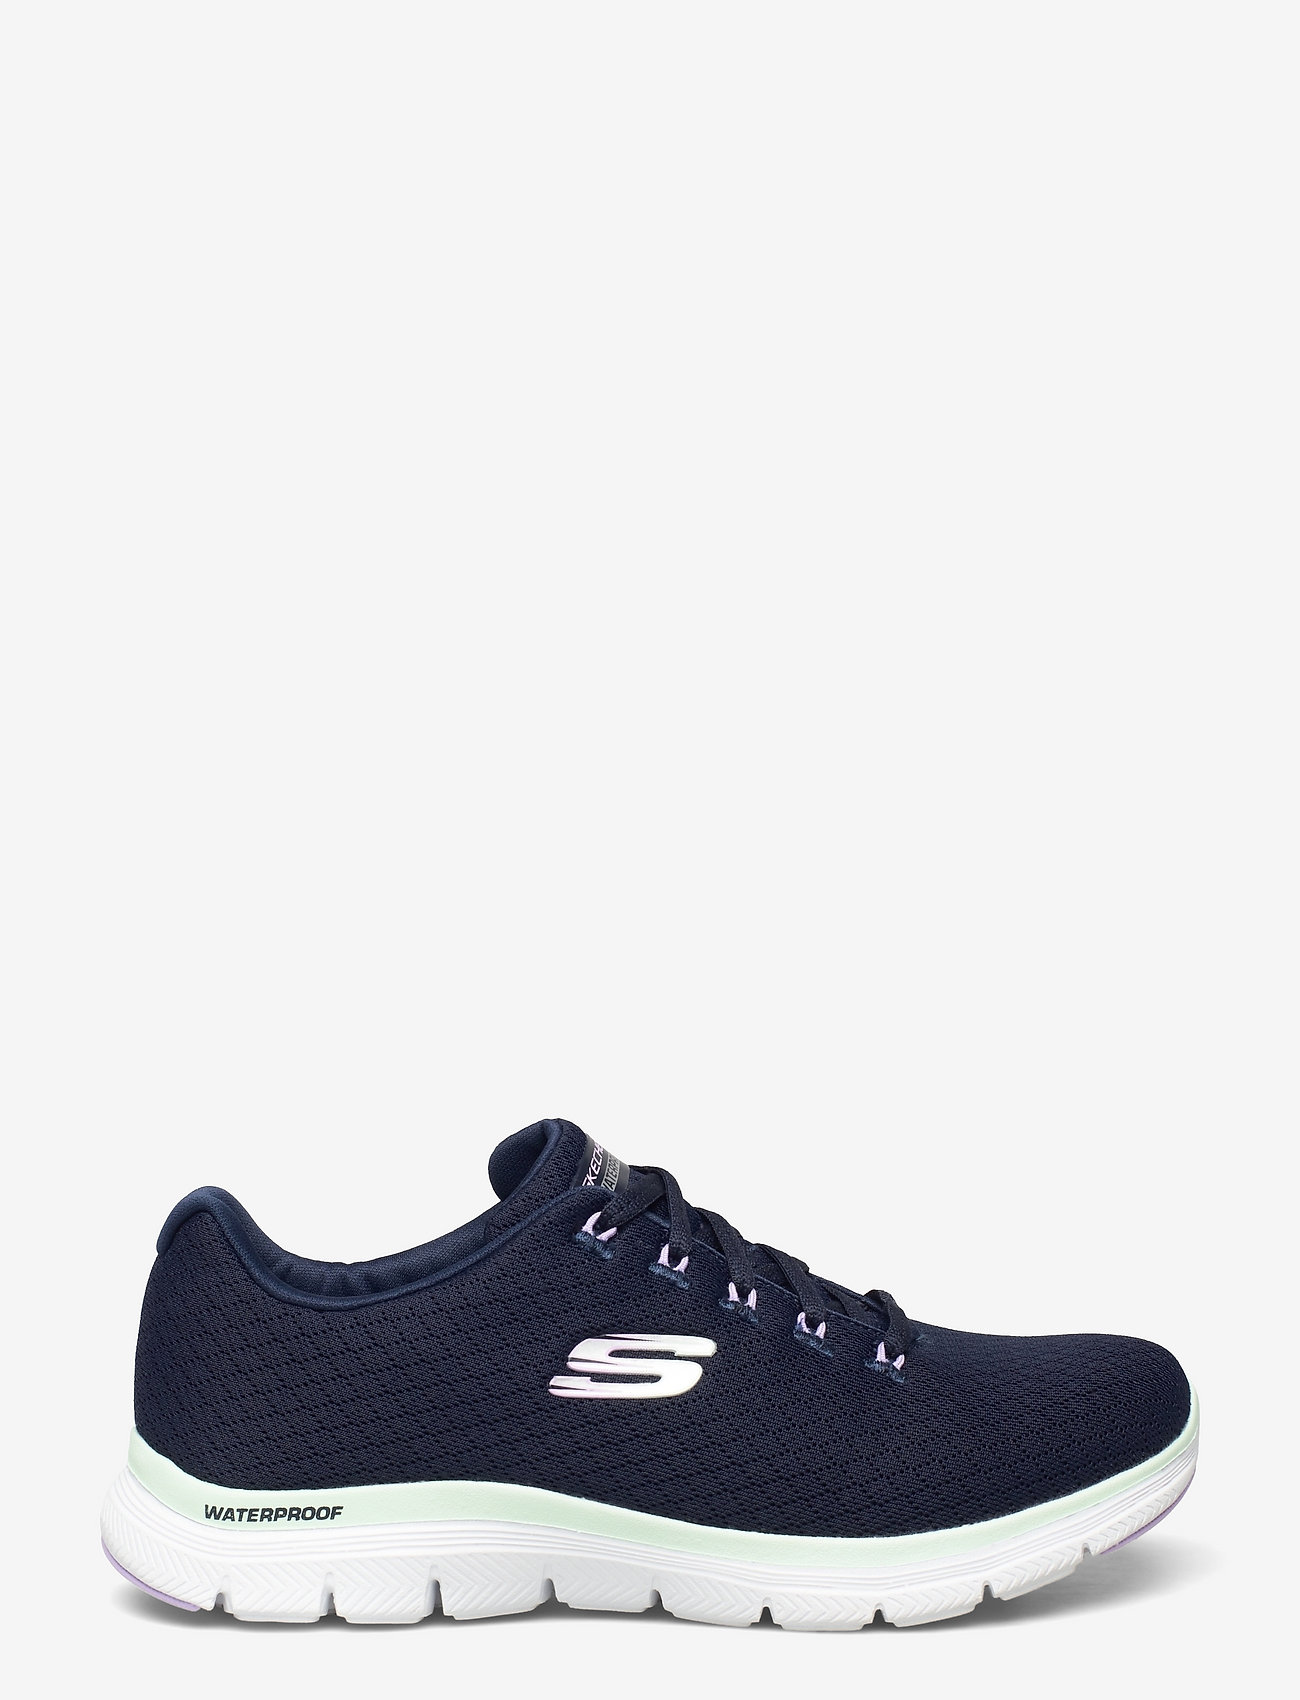 Skechers - Womens Flex Appeal 4.0 - Waterproof - low top sneakers - nvaq navy aqua - 1